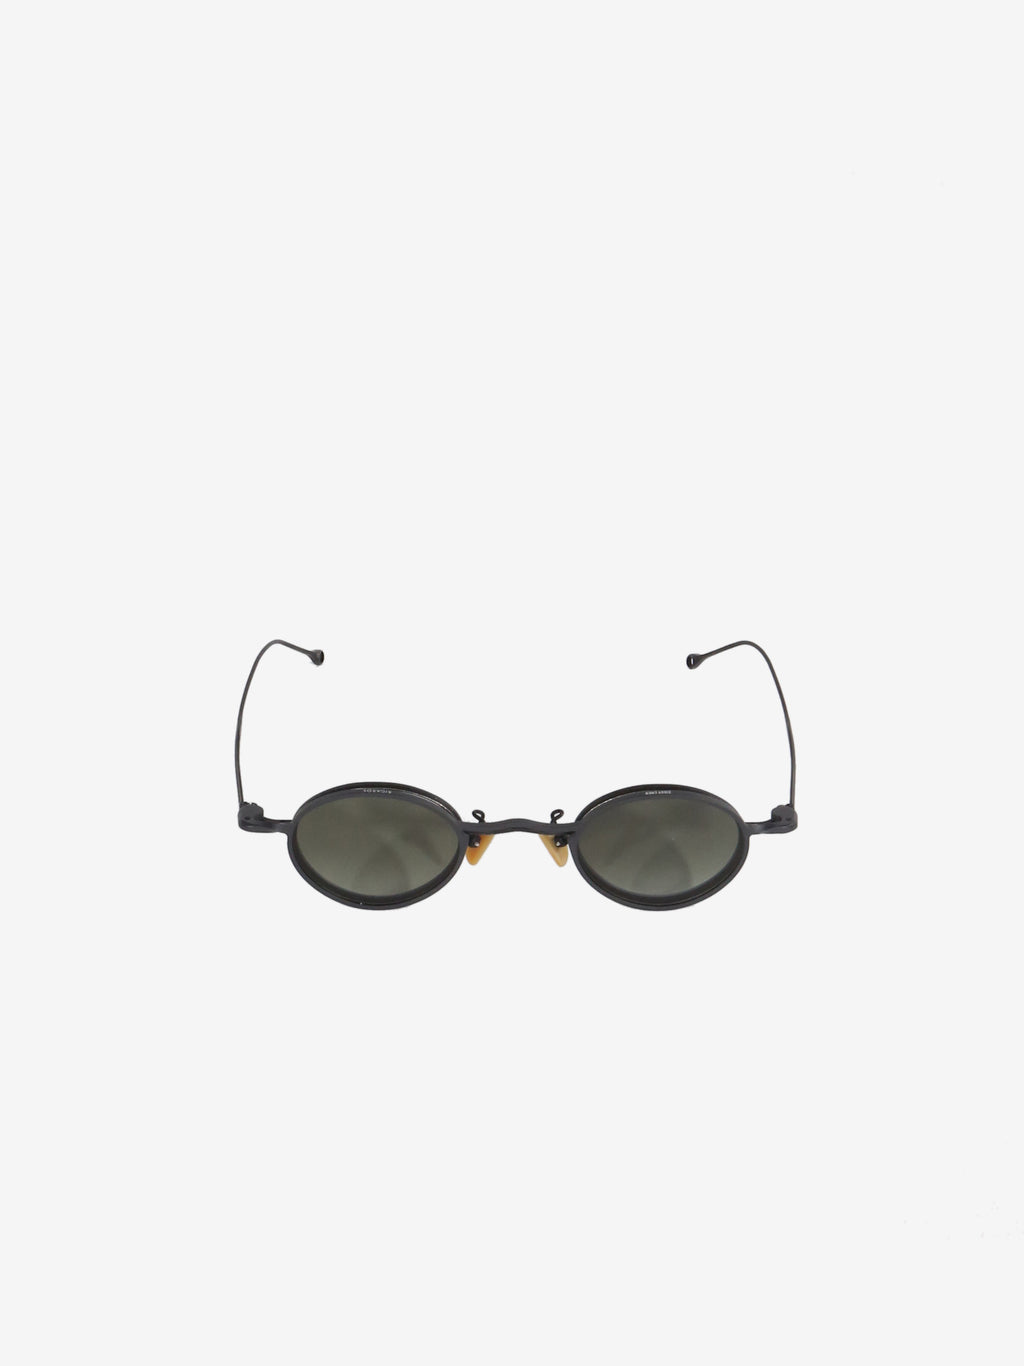 RIGARDS X ZIGGY CHEN Pure Titanium Clip-on Sunglasses Vintage Black+Gray/Clear+Green.GR Lens/Vintage